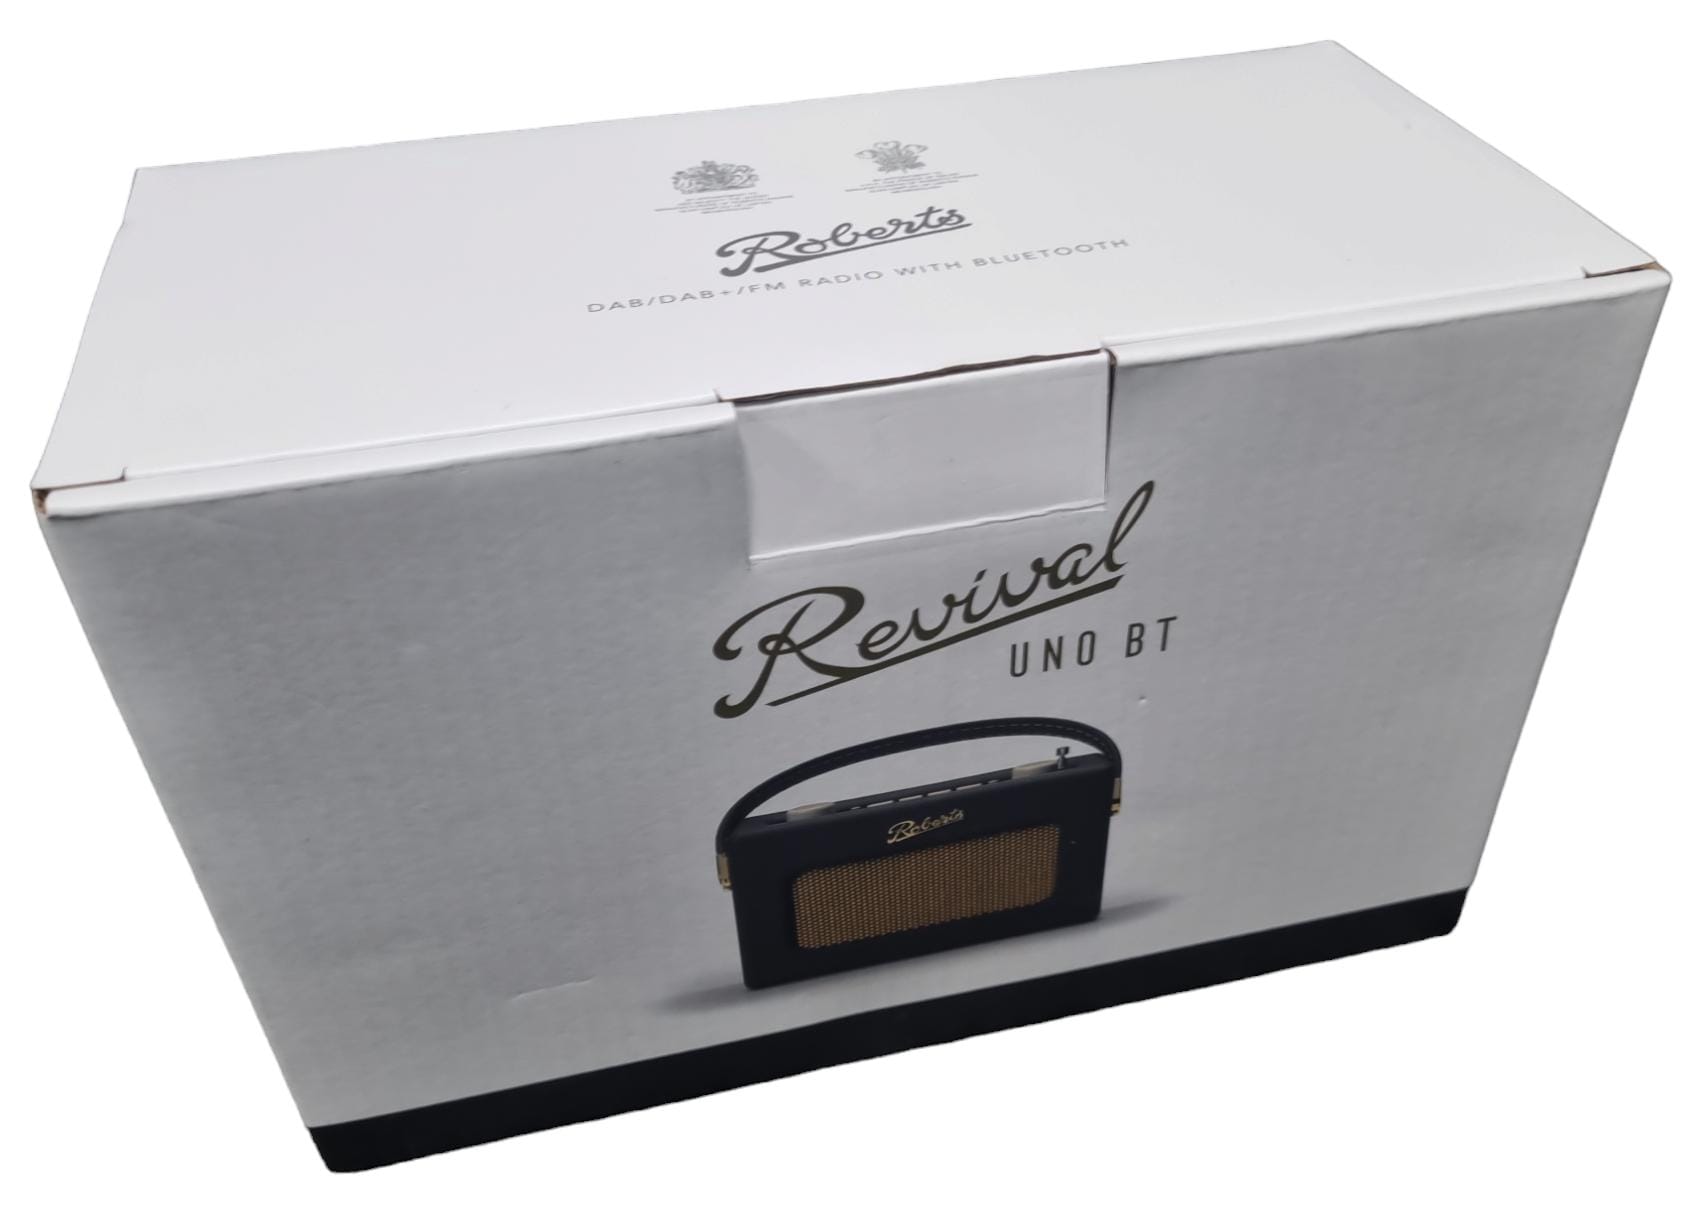 Roberts Revival Uno DAB/DAB+/FM radio with Bluetooth - NEW